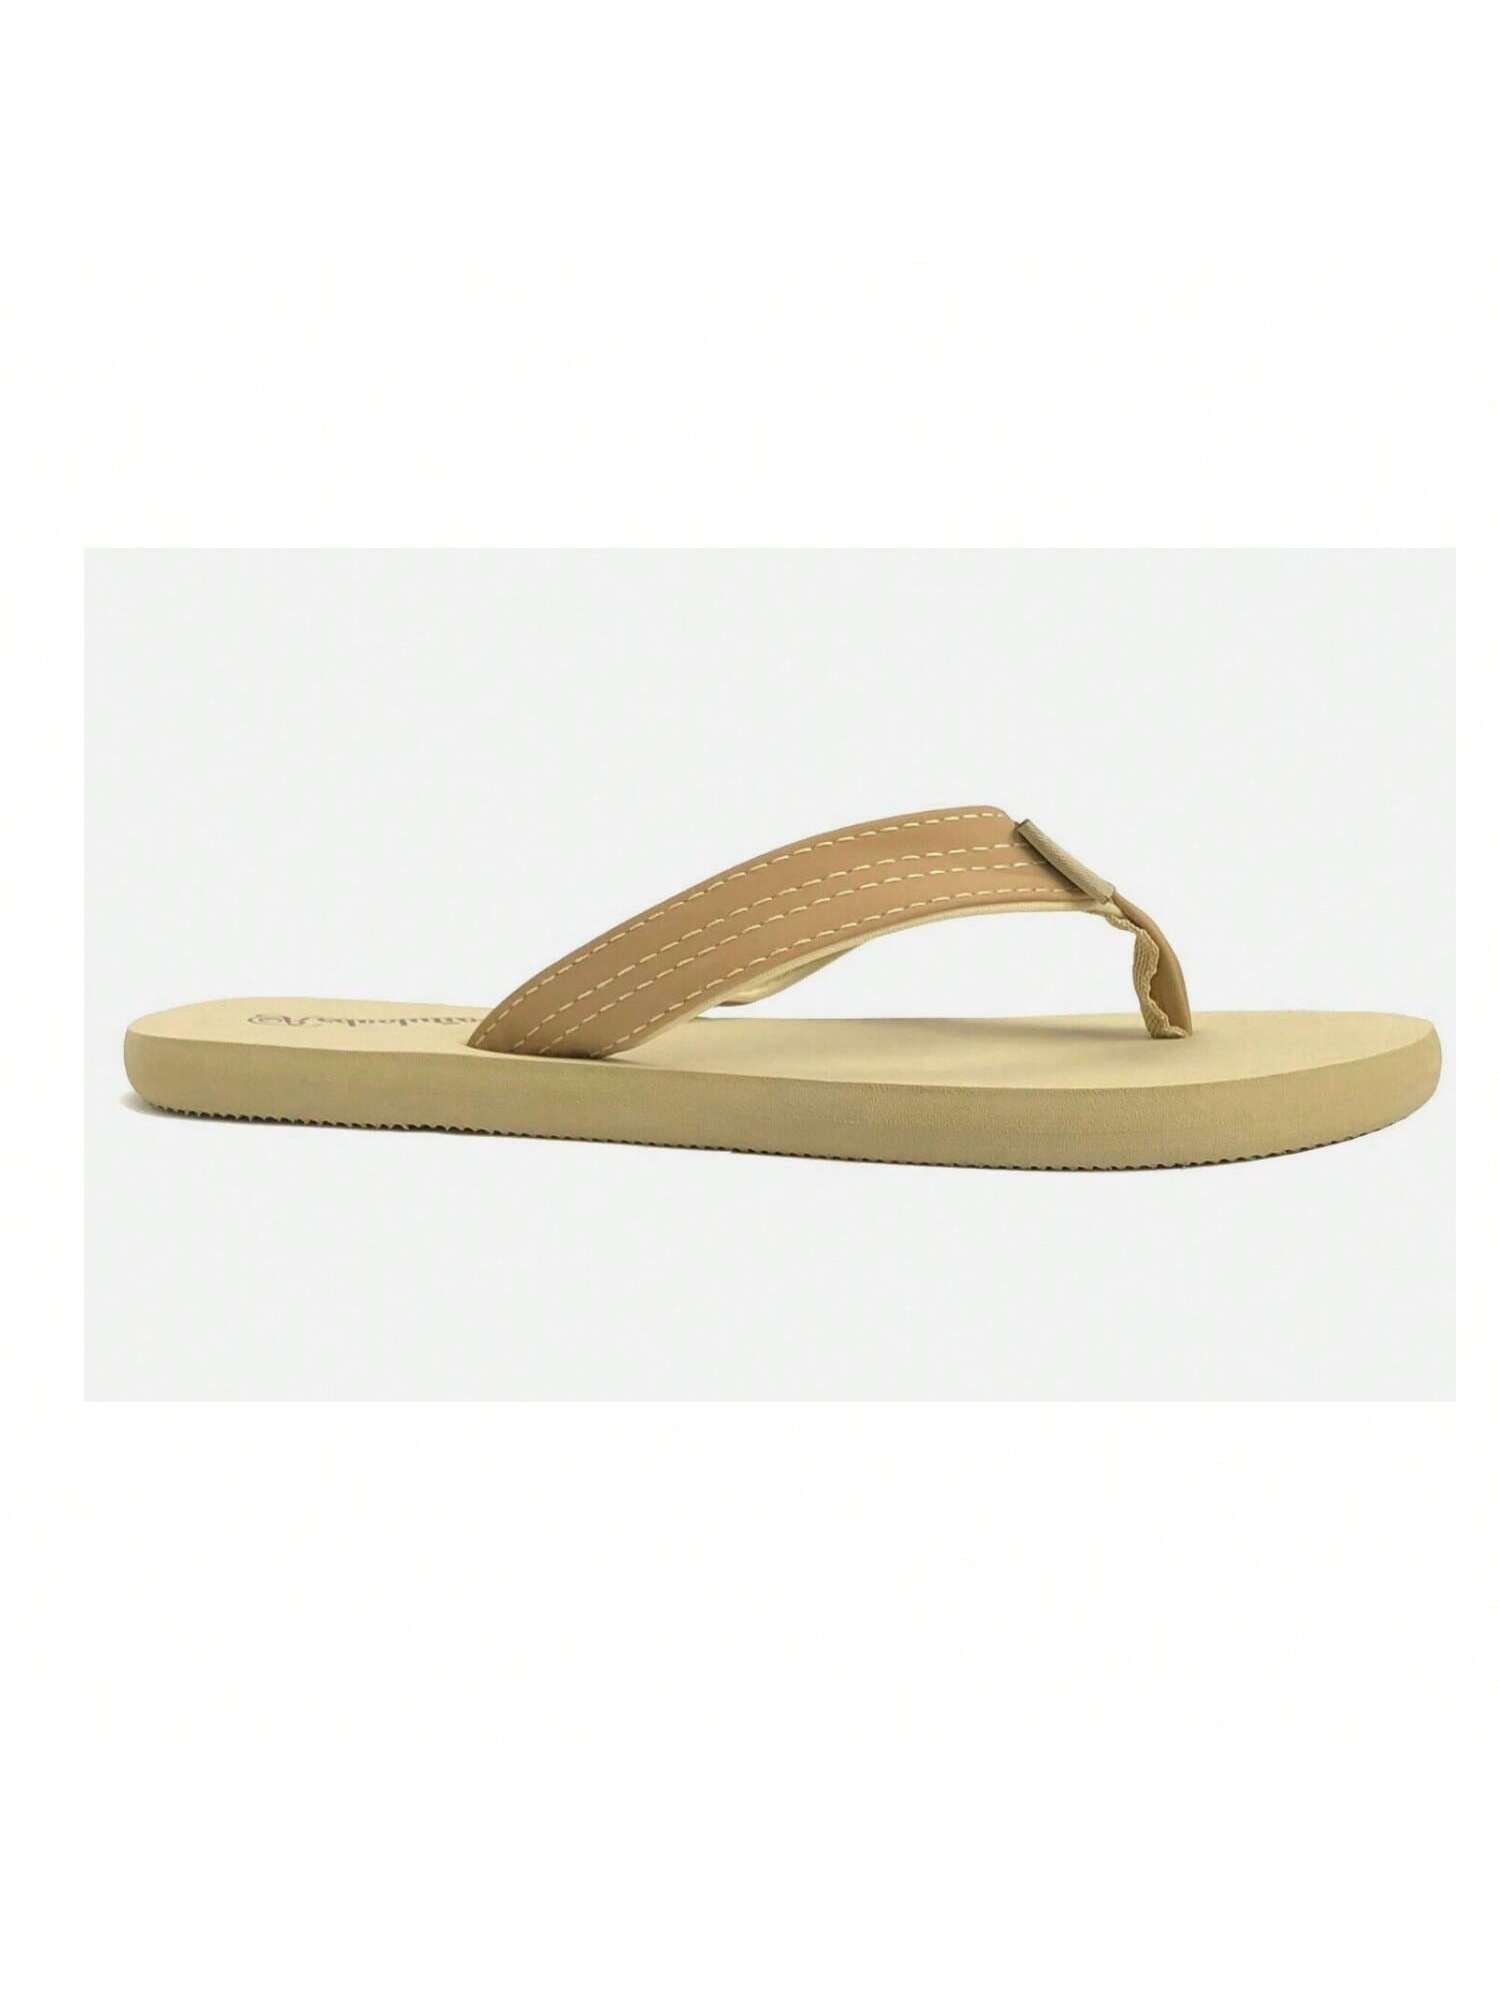 Women's Classic Beach Flip Flop Soft Sandal-1033-Camel-2